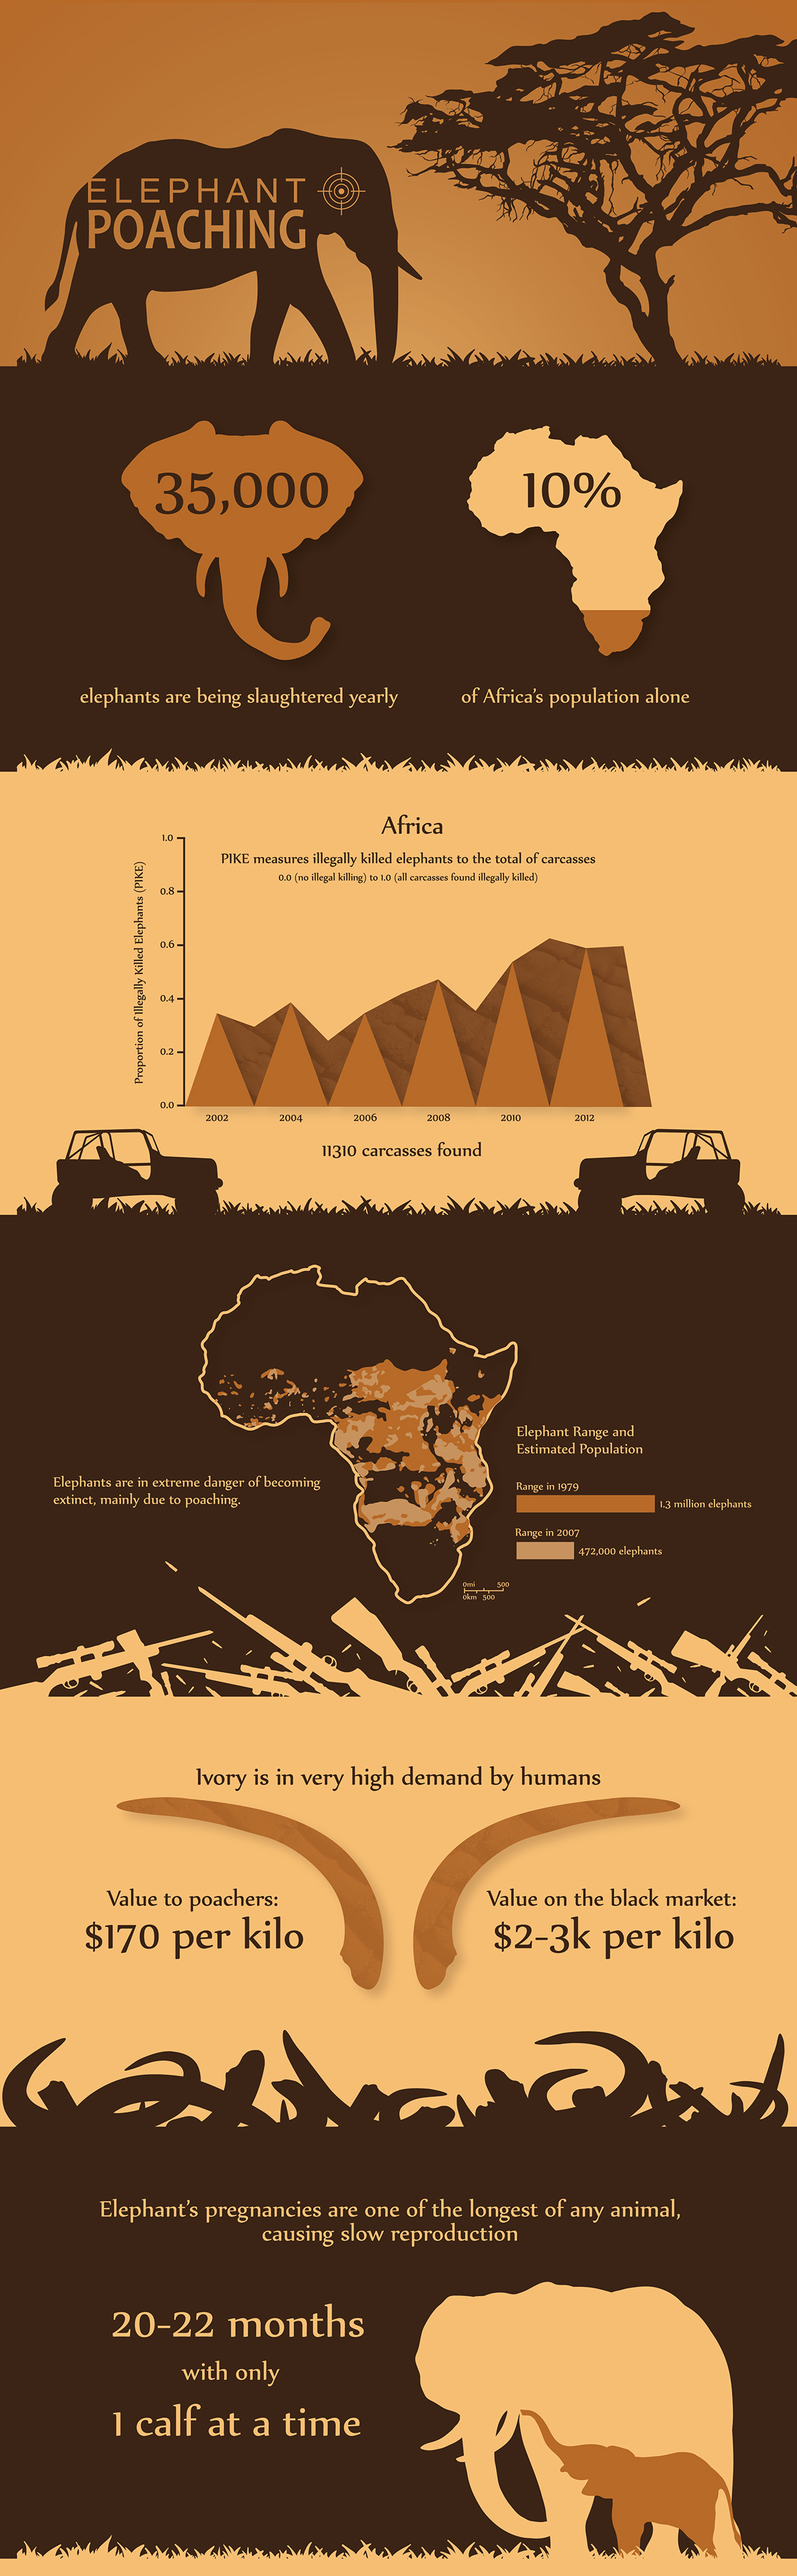 elephant poaching infographic africa adaa_2015 adaa_school ot adaa_country united_states adaa_social_impact_design social awareness social cause